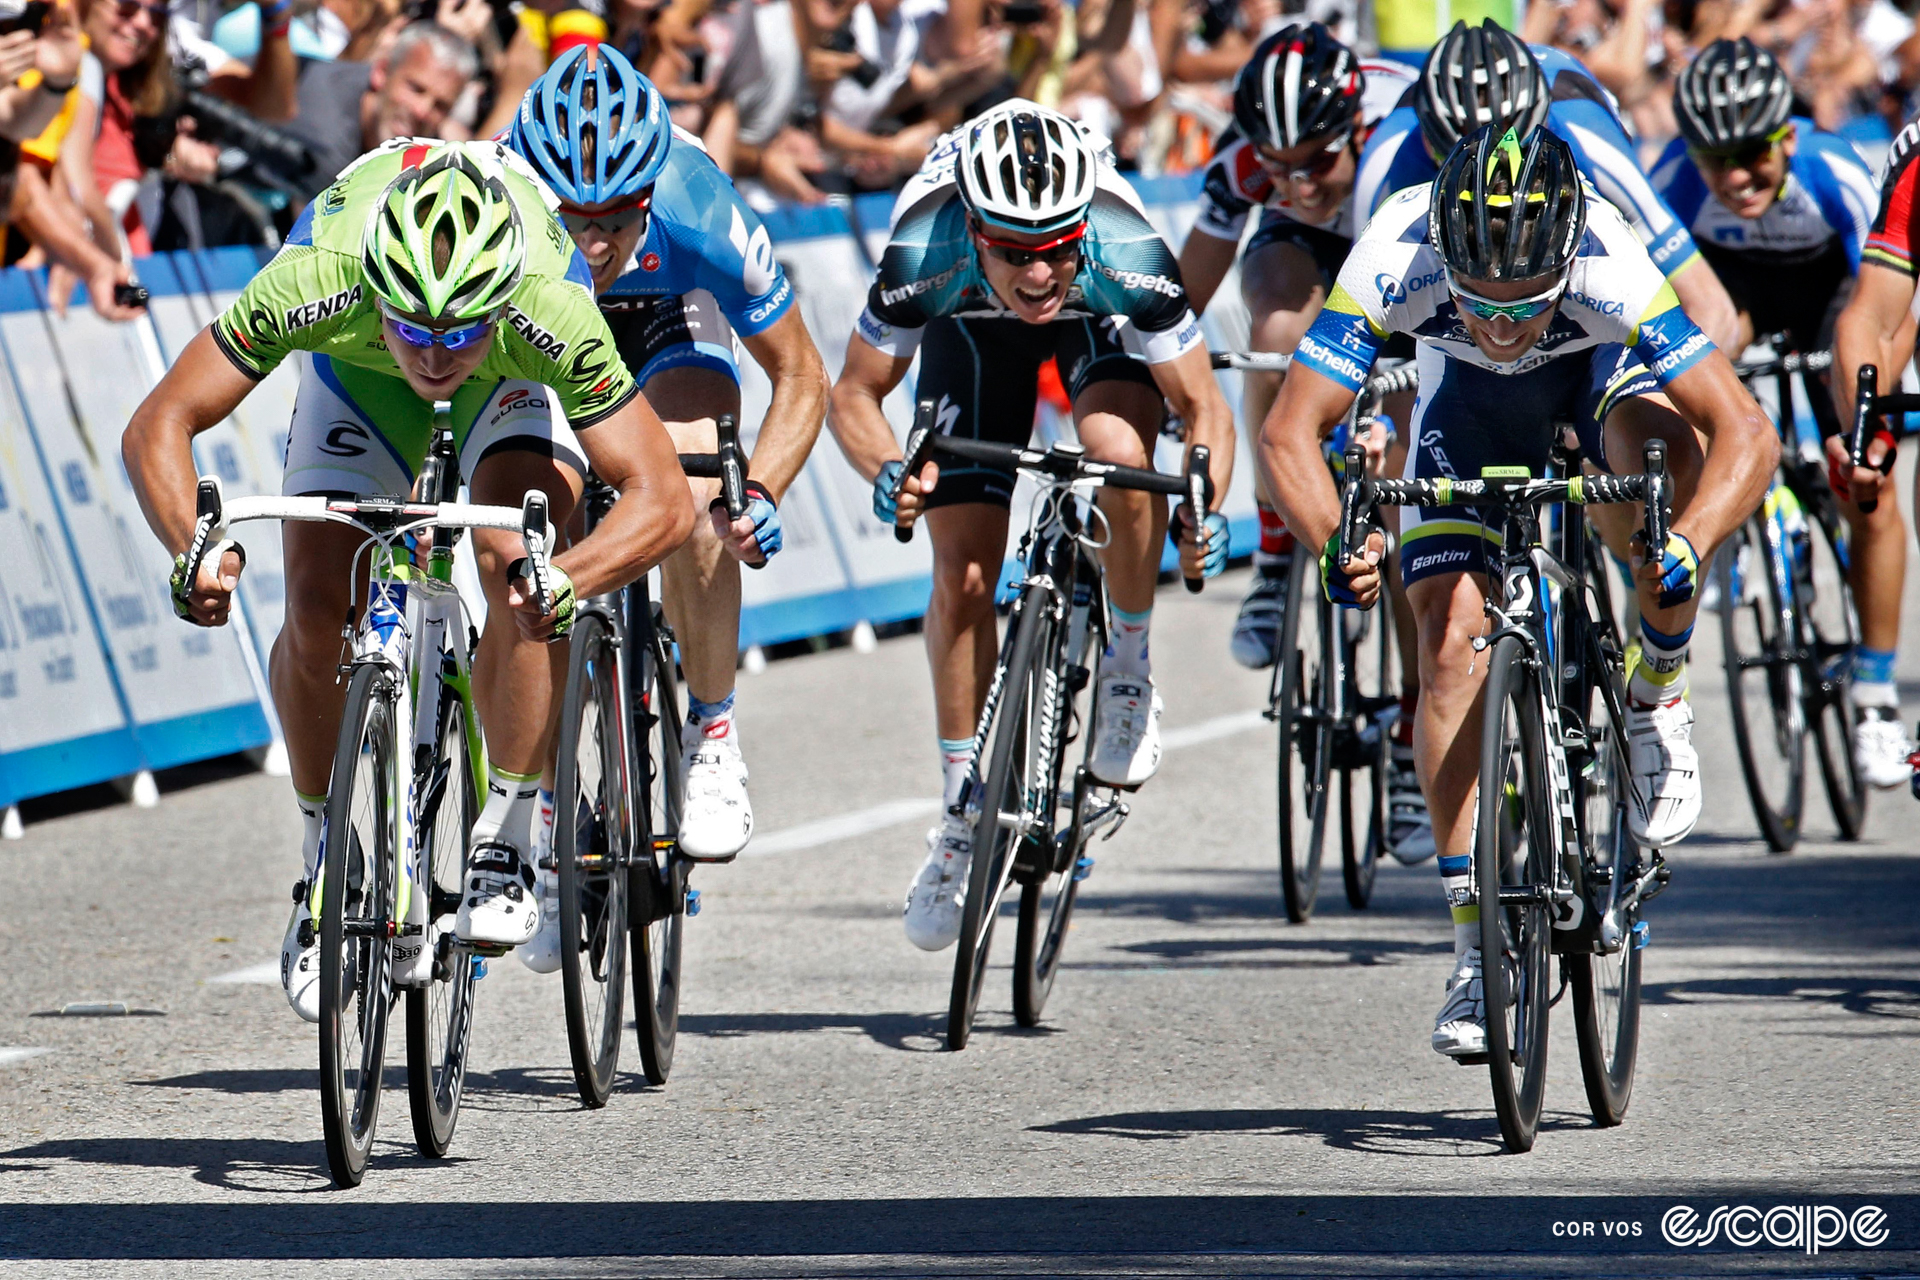 Peter Sagan on his way to winning a bunch sprint at the 2013 Tour of California.